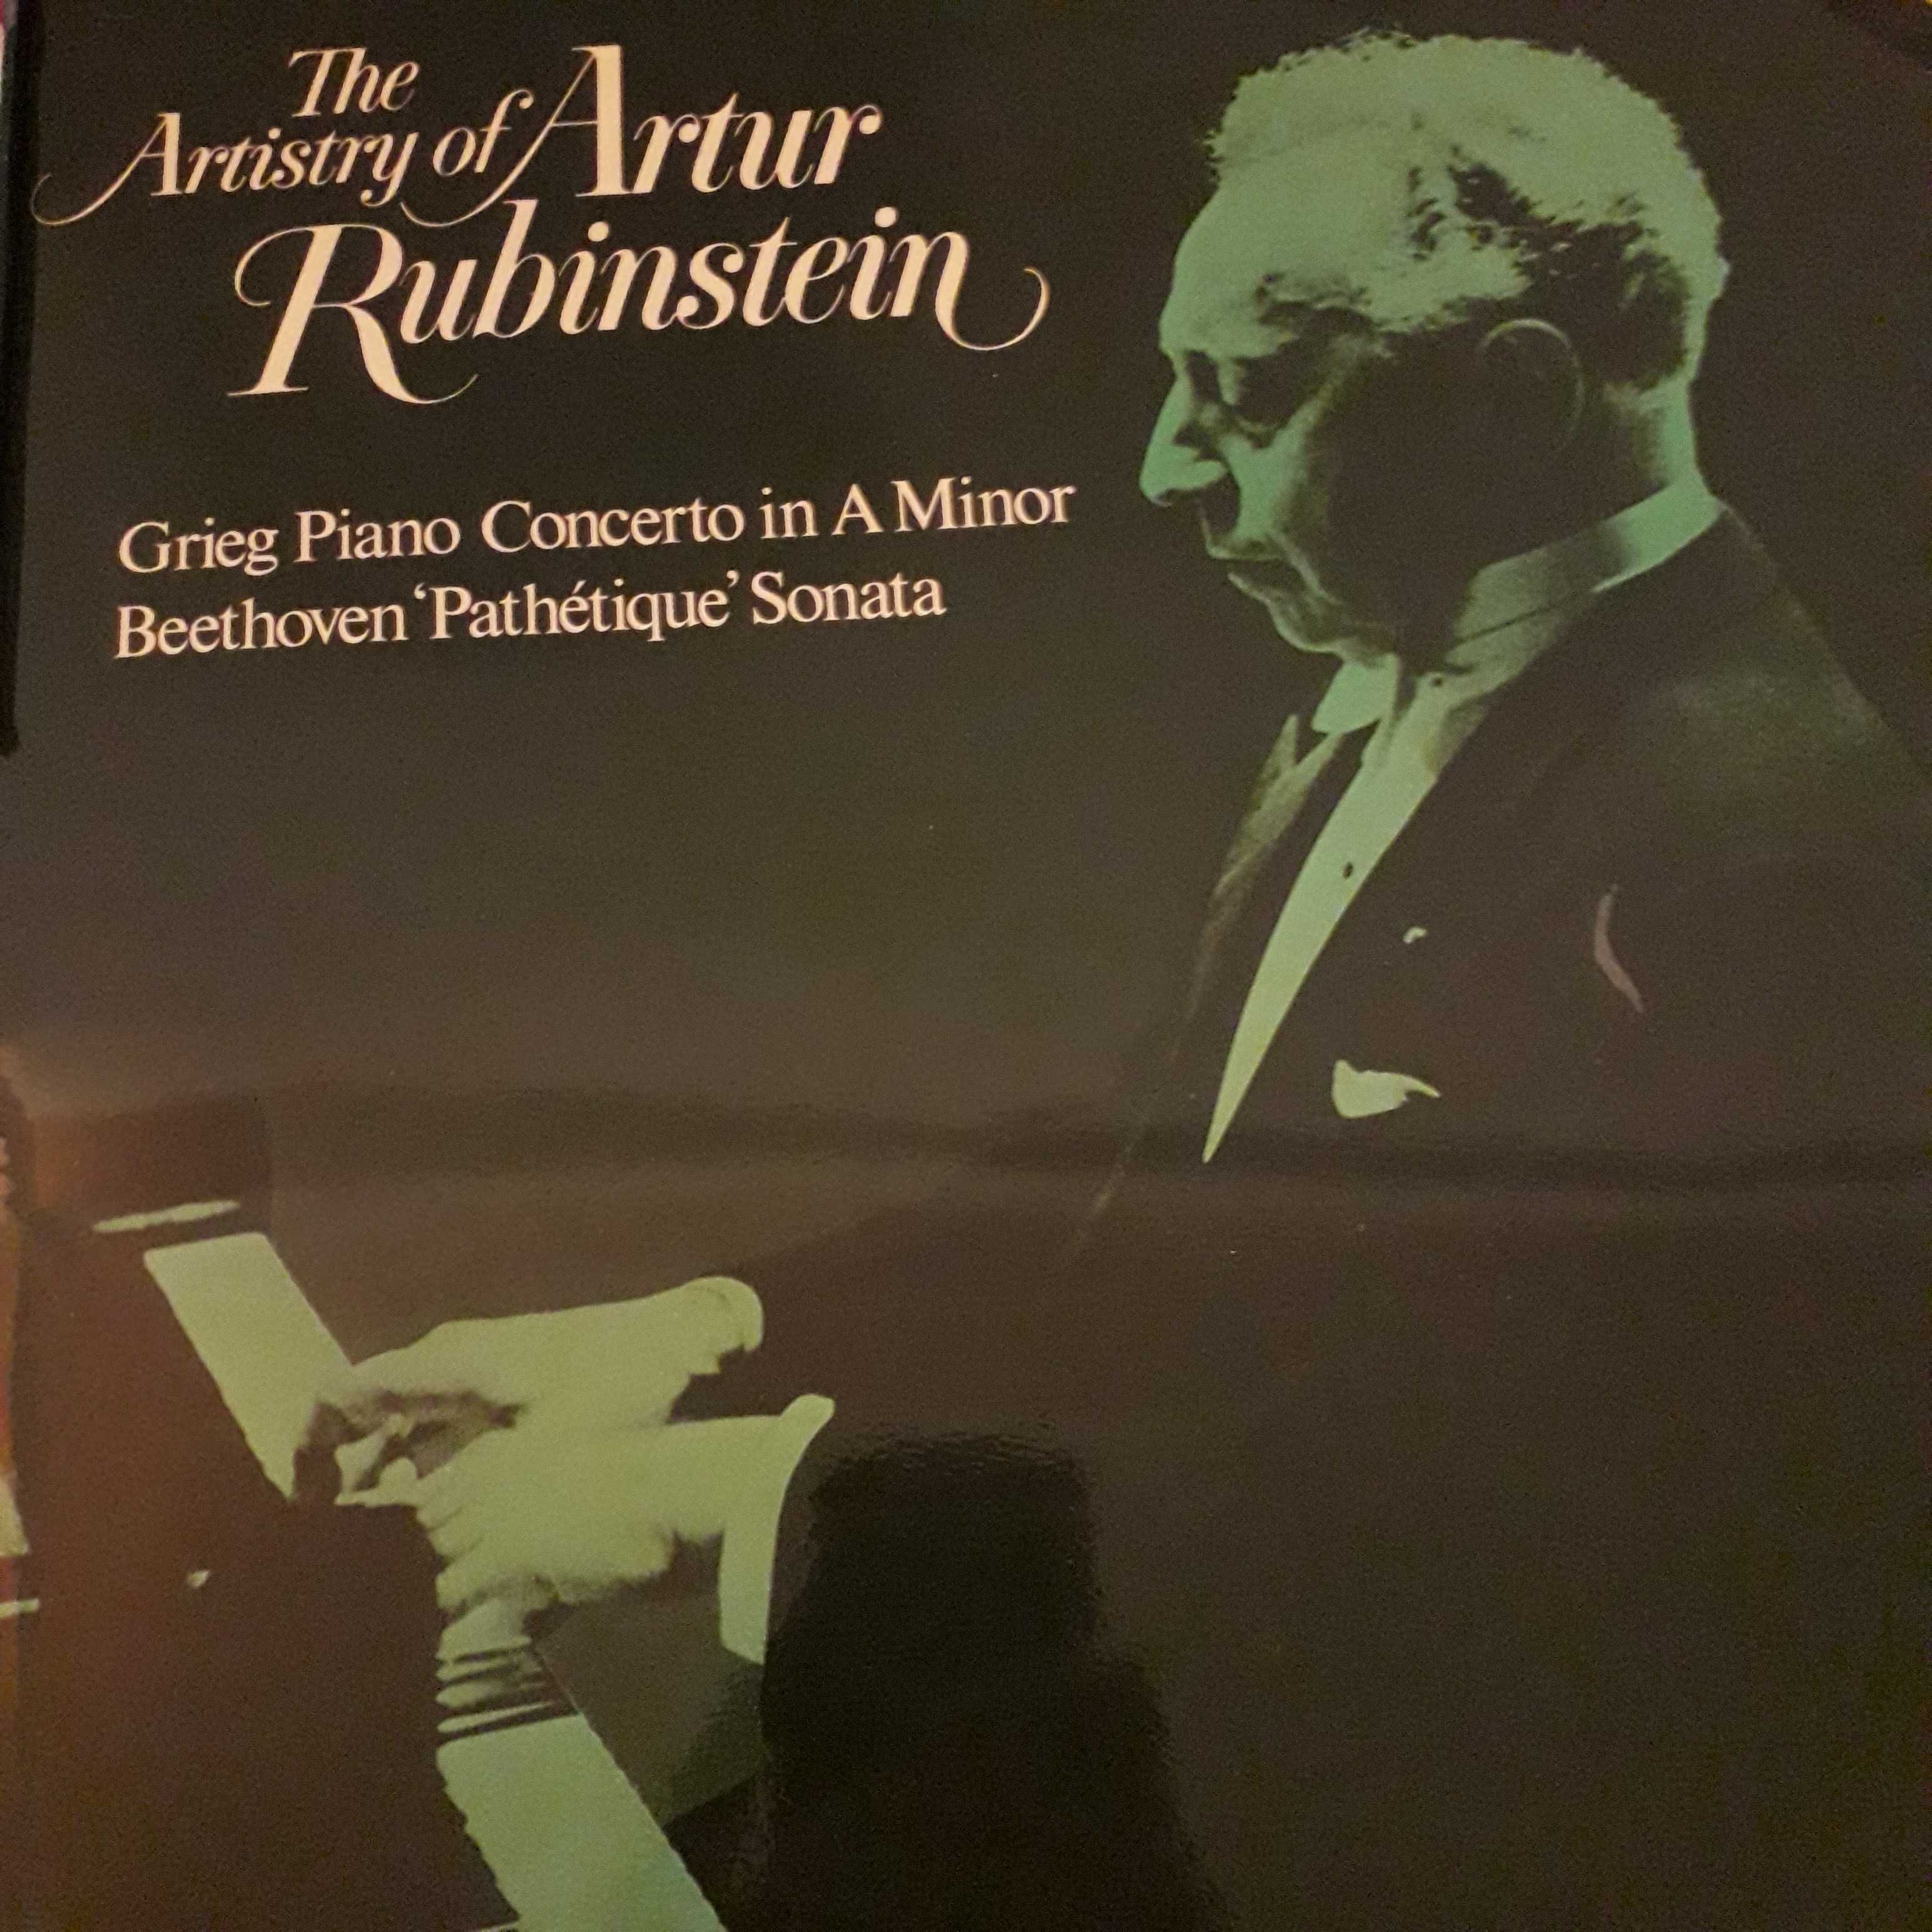 Colectânea de 7 discos de vinil "The Artistry of Artur Rubinstein  "